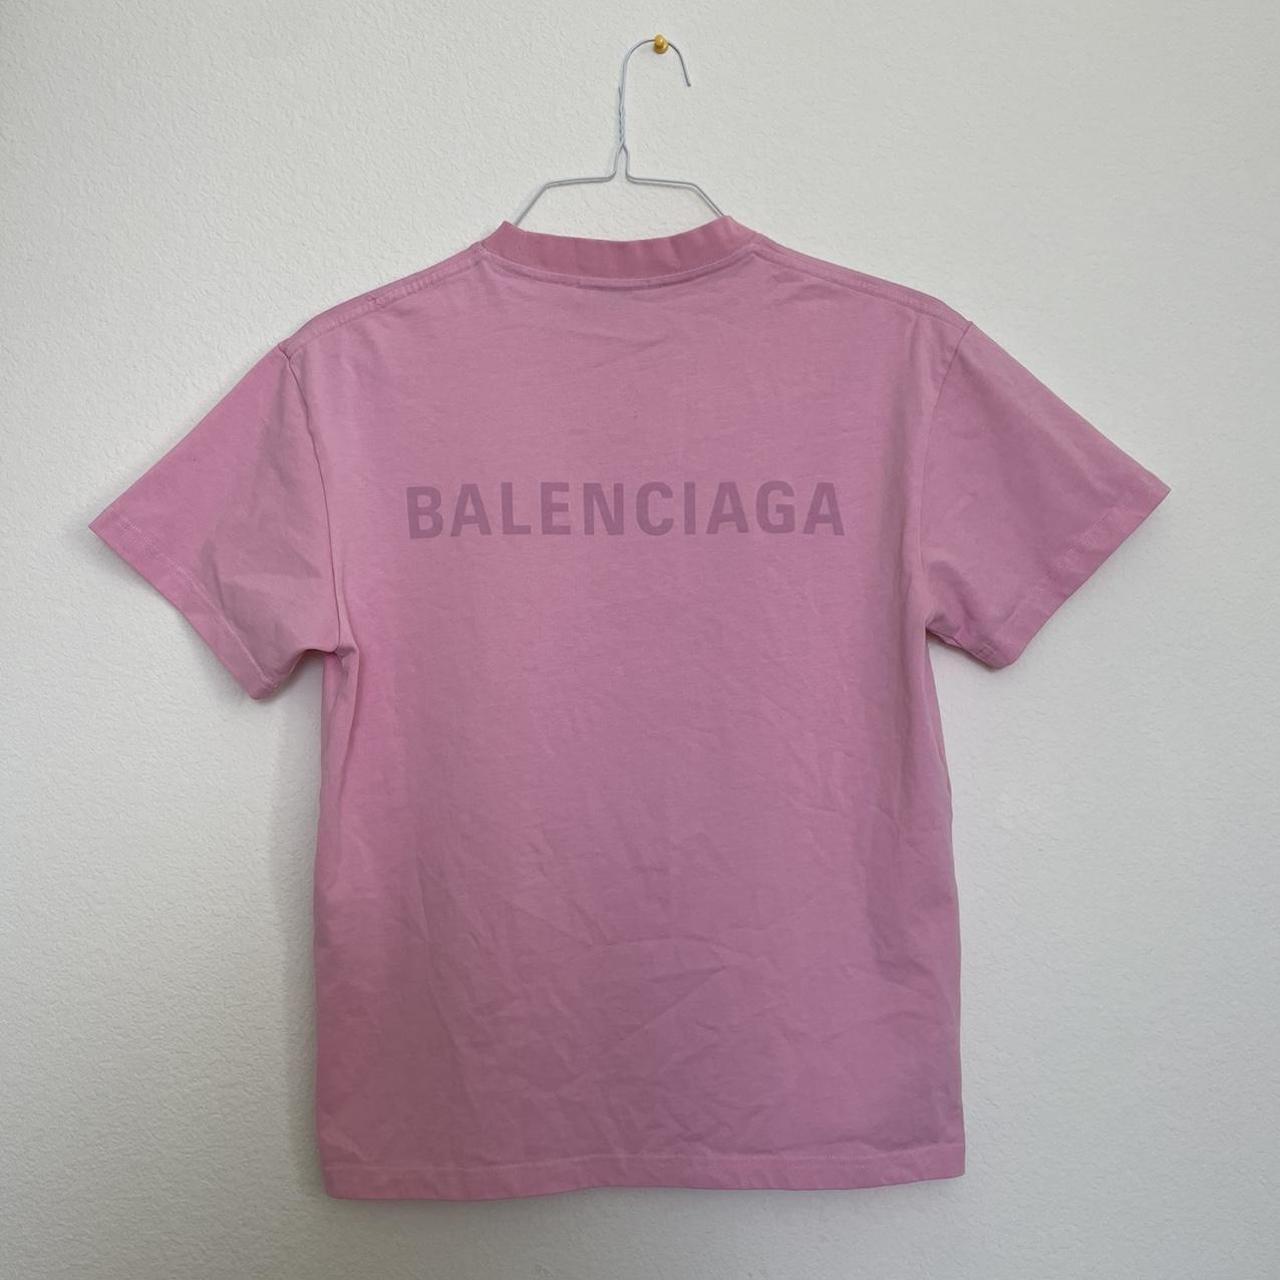 Product Image 1 - Authentic Balenciaga Pink Oversized T-Shirt

✓